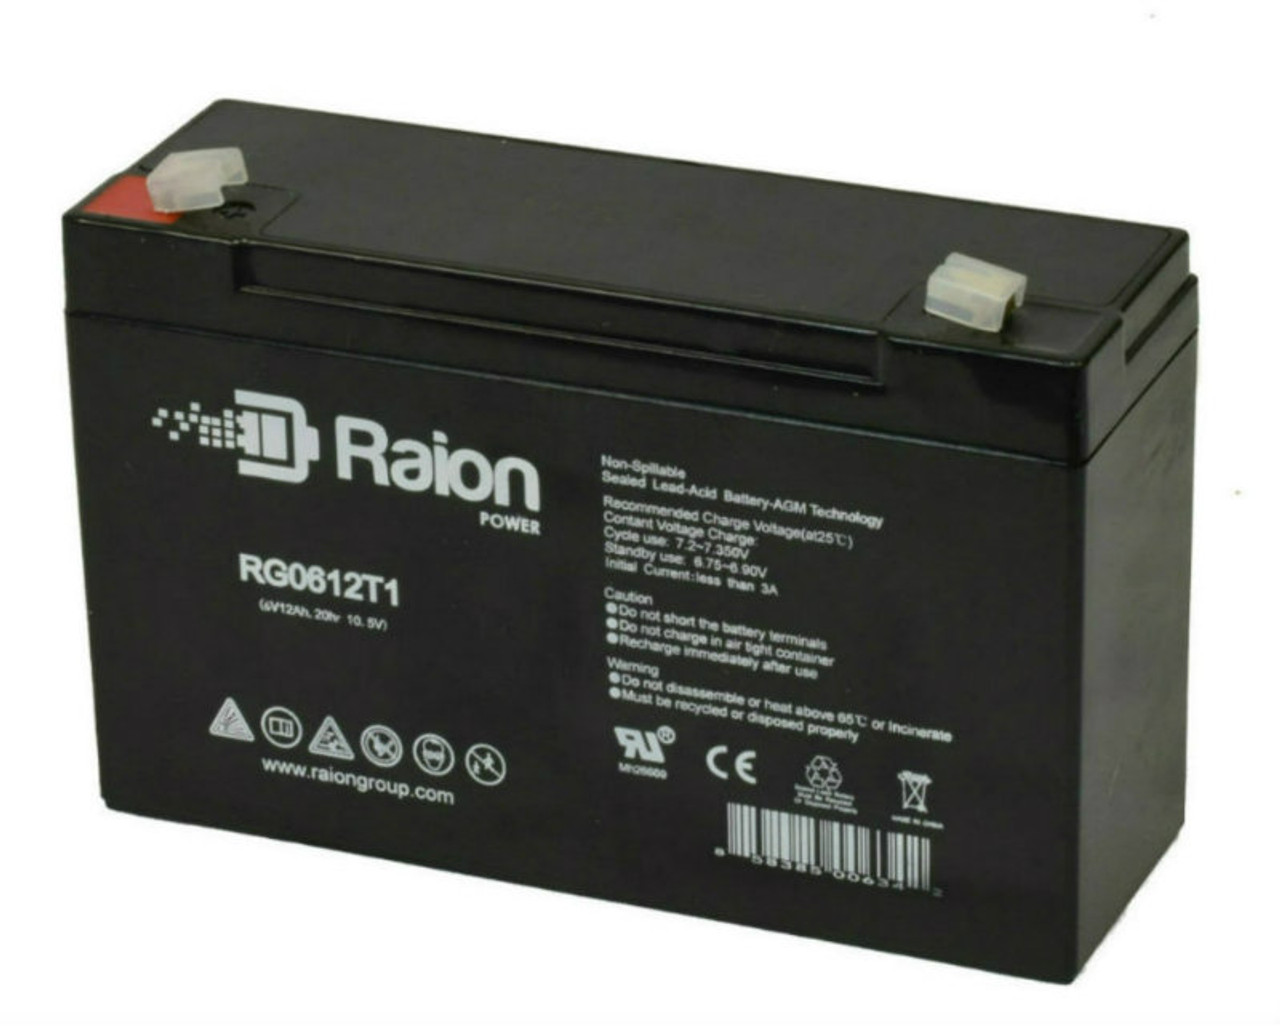 Raion Power RG06120T1 Replacement Battery for Phantom Power BT-6V-12A